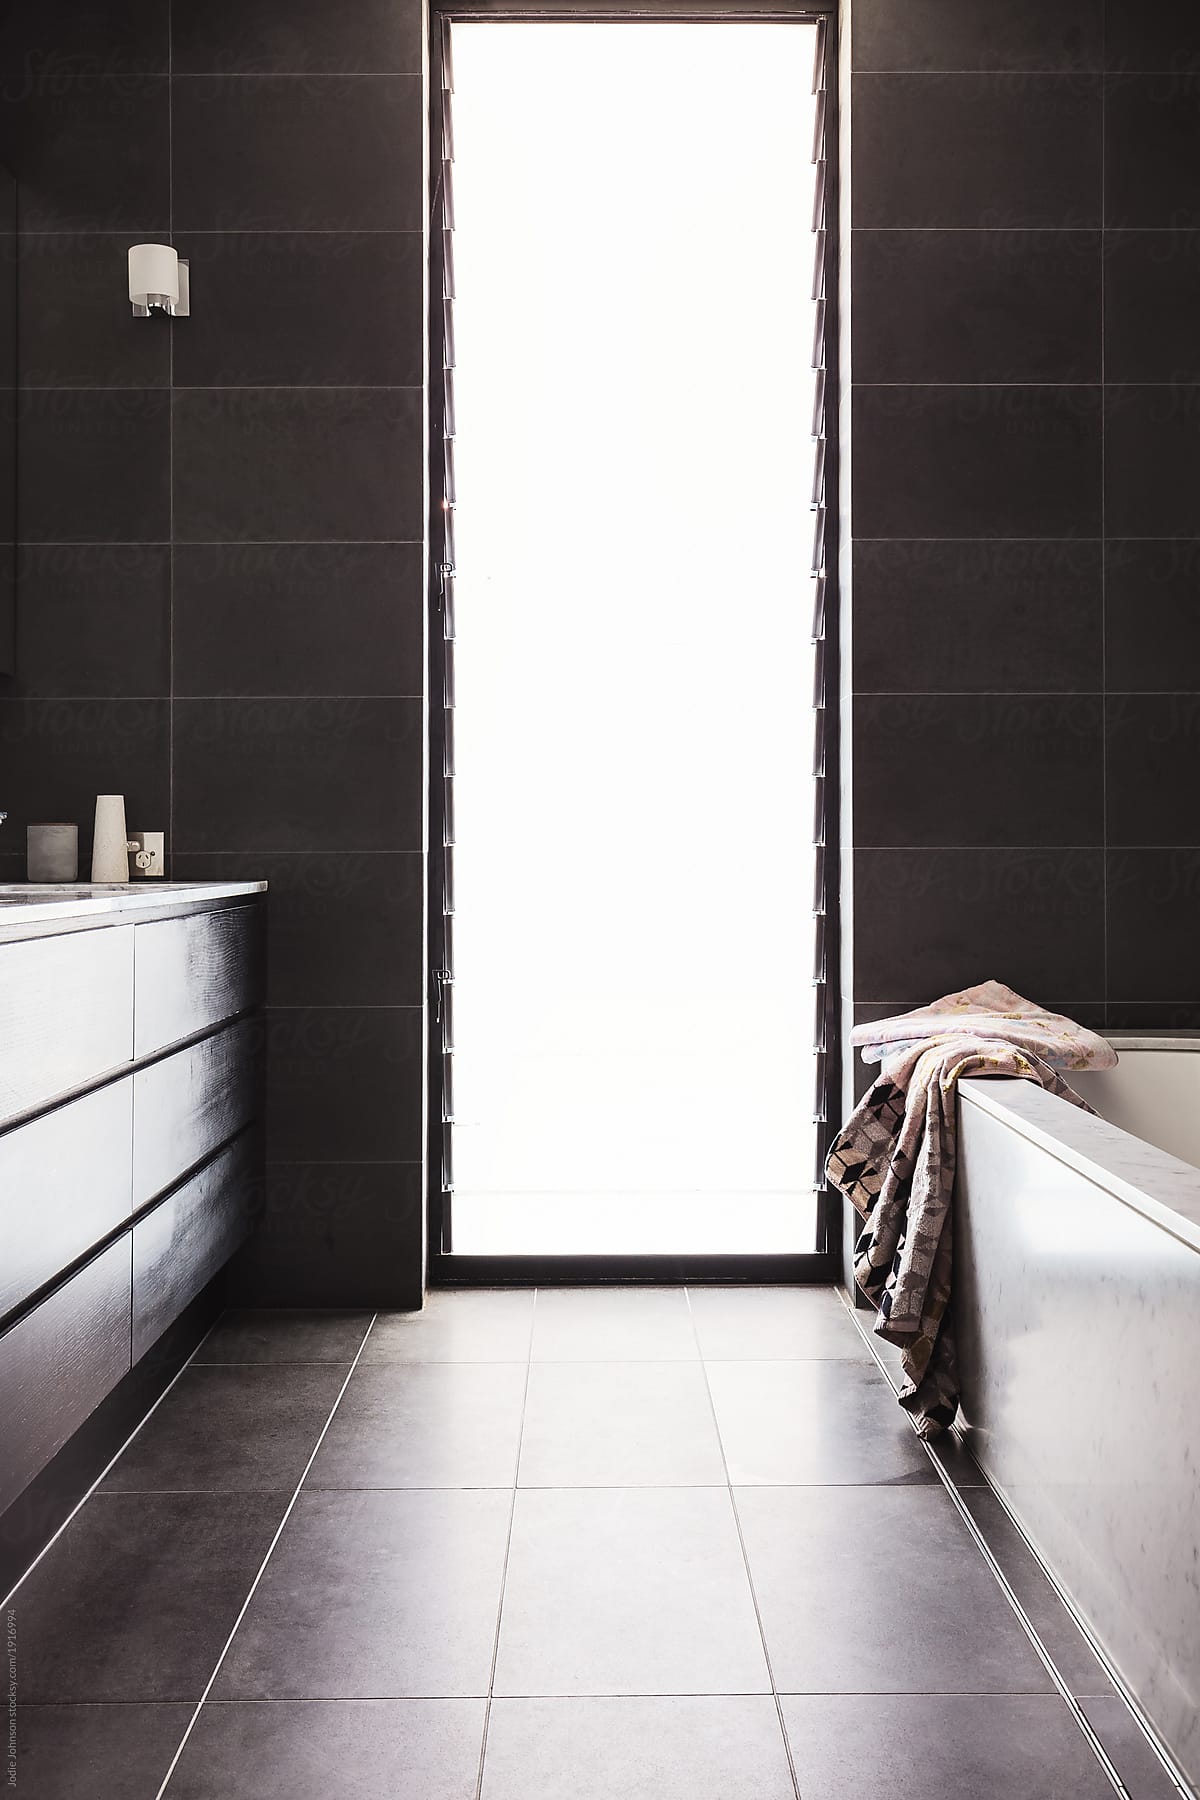 Luxury Dark Tiled Bathroom With Floor To Ceiling Louvre Window By